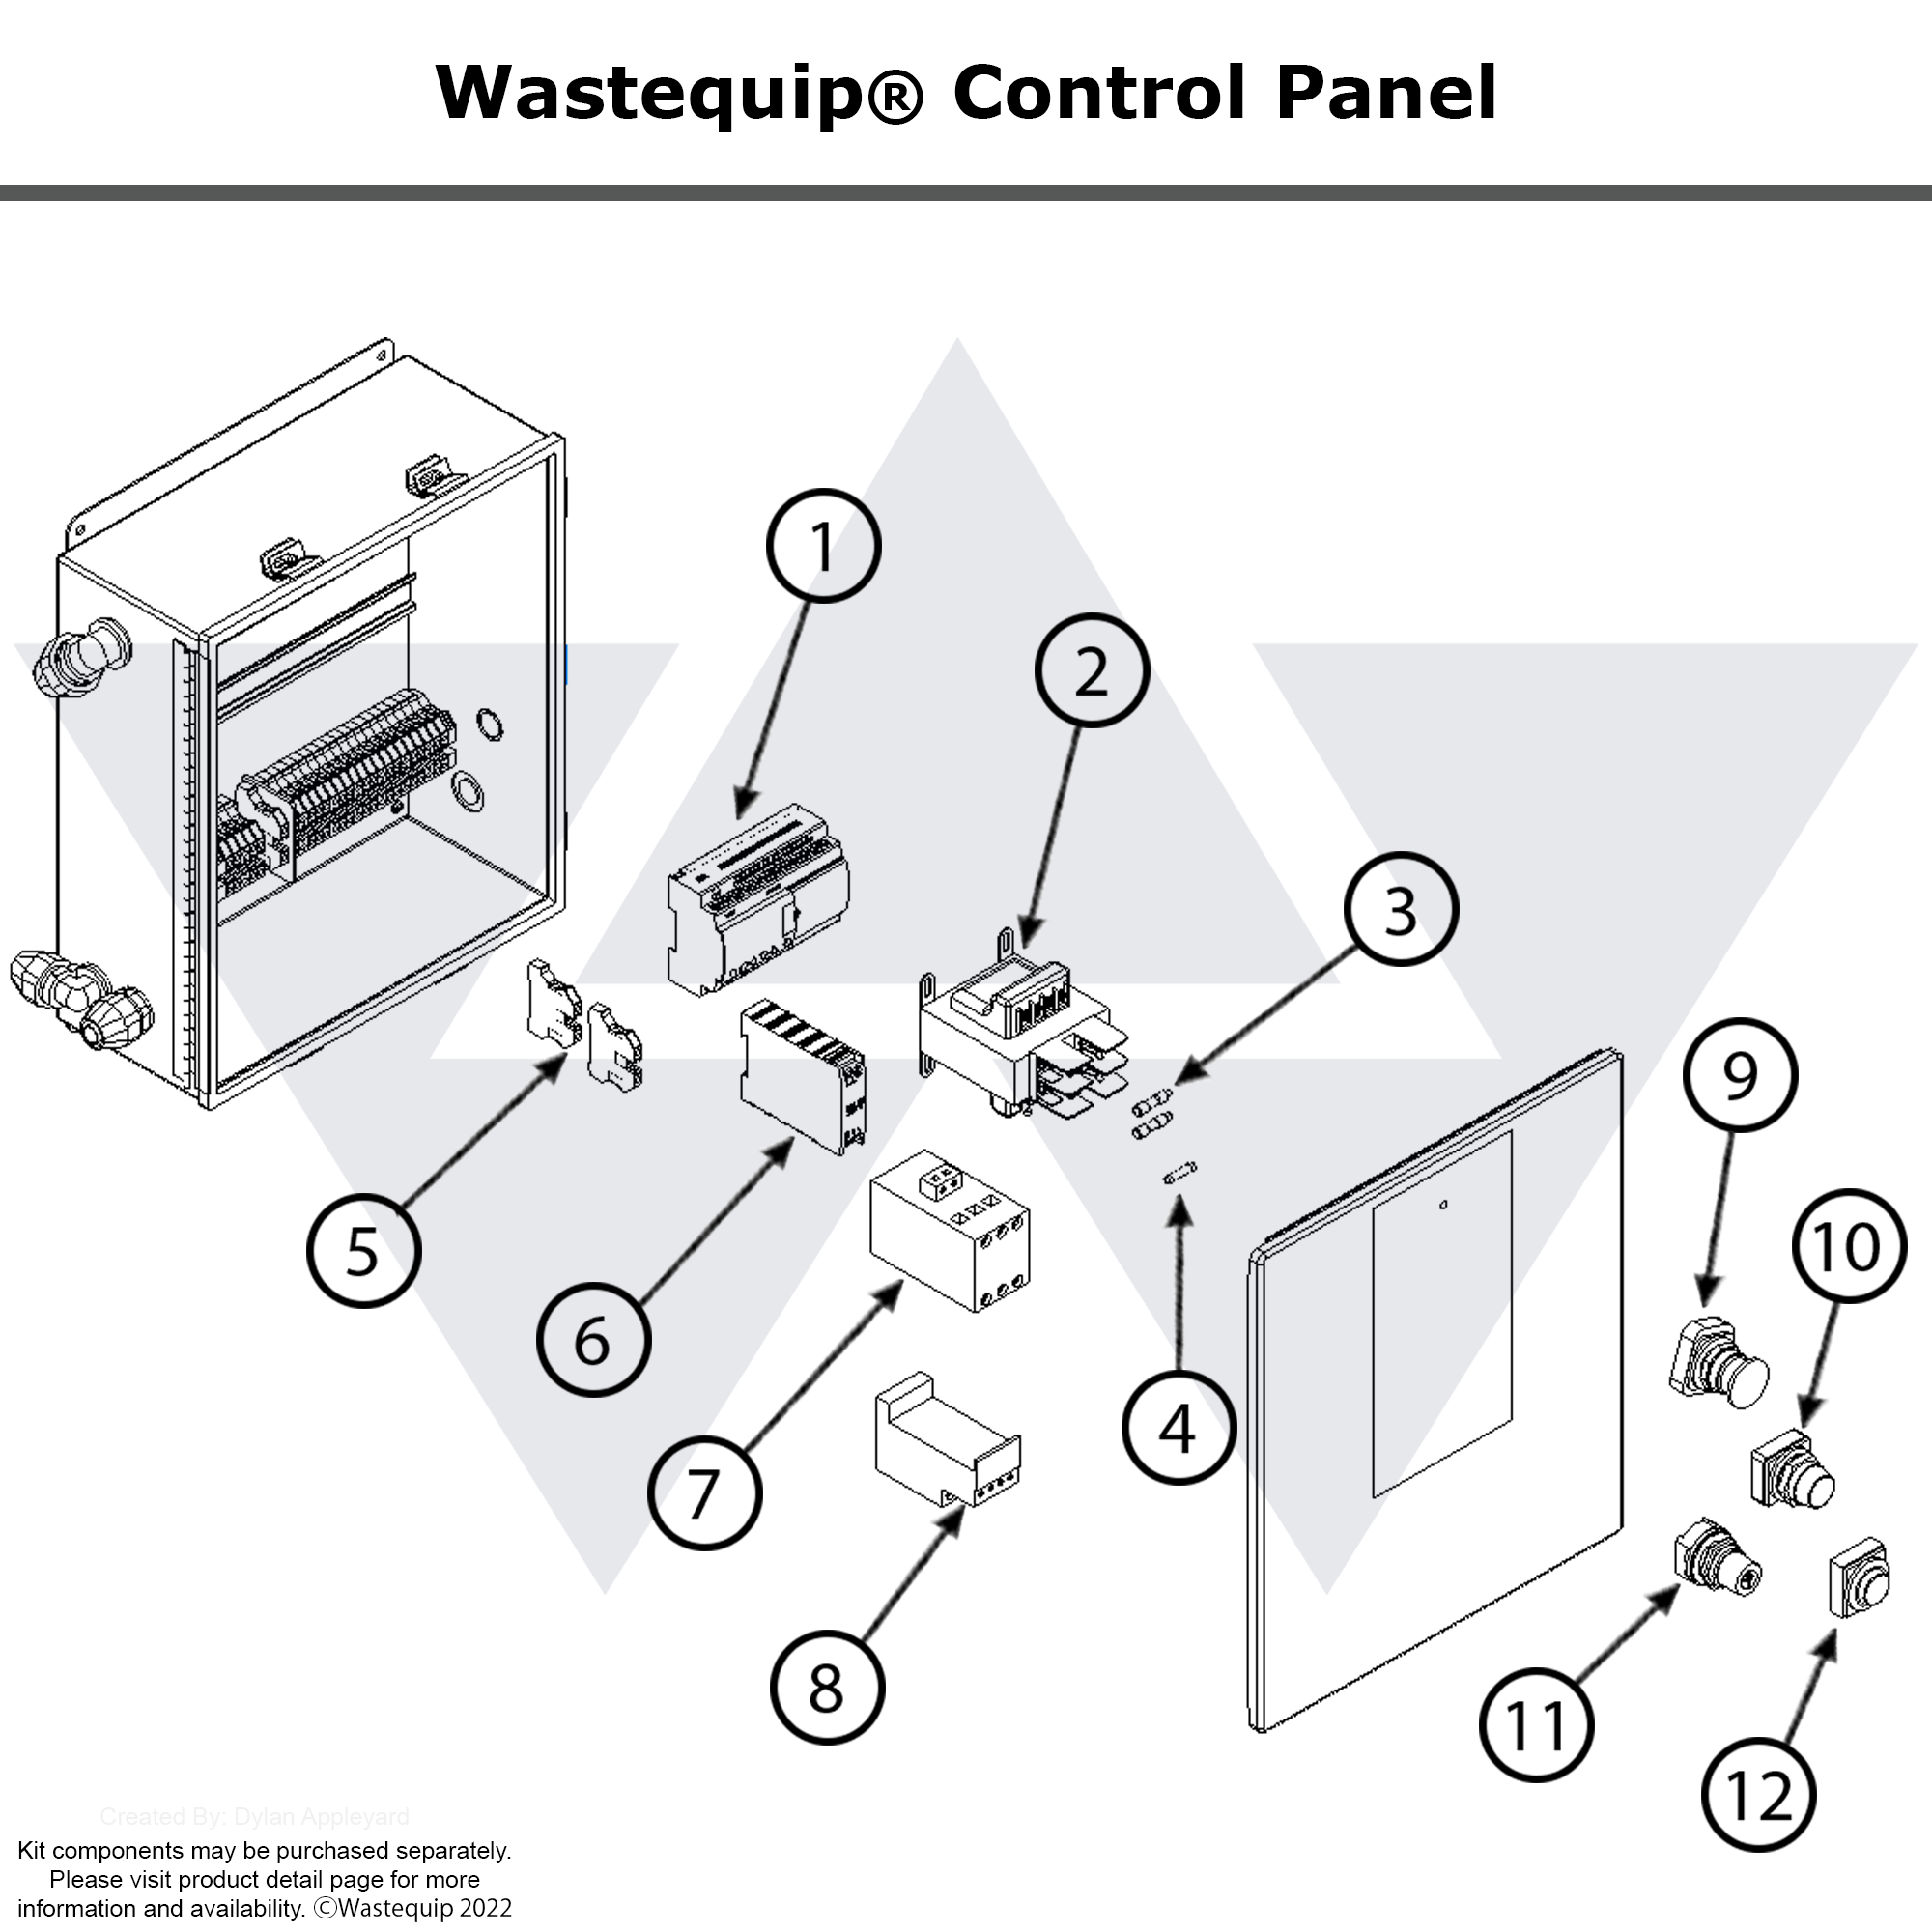 Wastequip® Control Panel